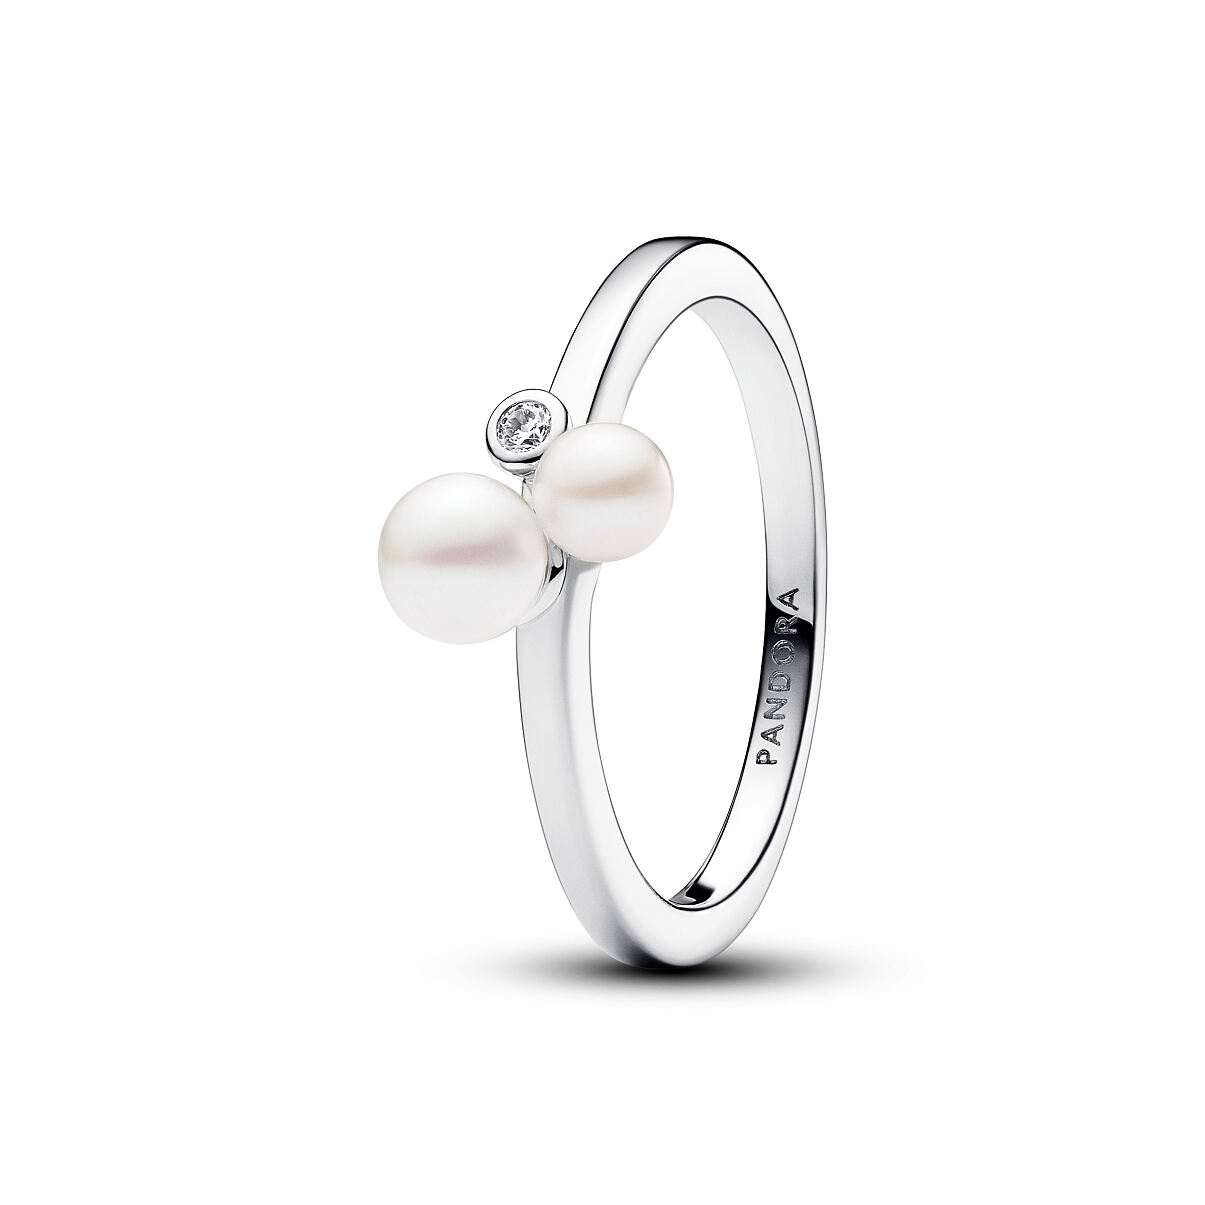 Pandora_Ring_Sterling Silver_Freshwater Pearls_Cubic Zirconia_193156C01_79,00 Euro (3)